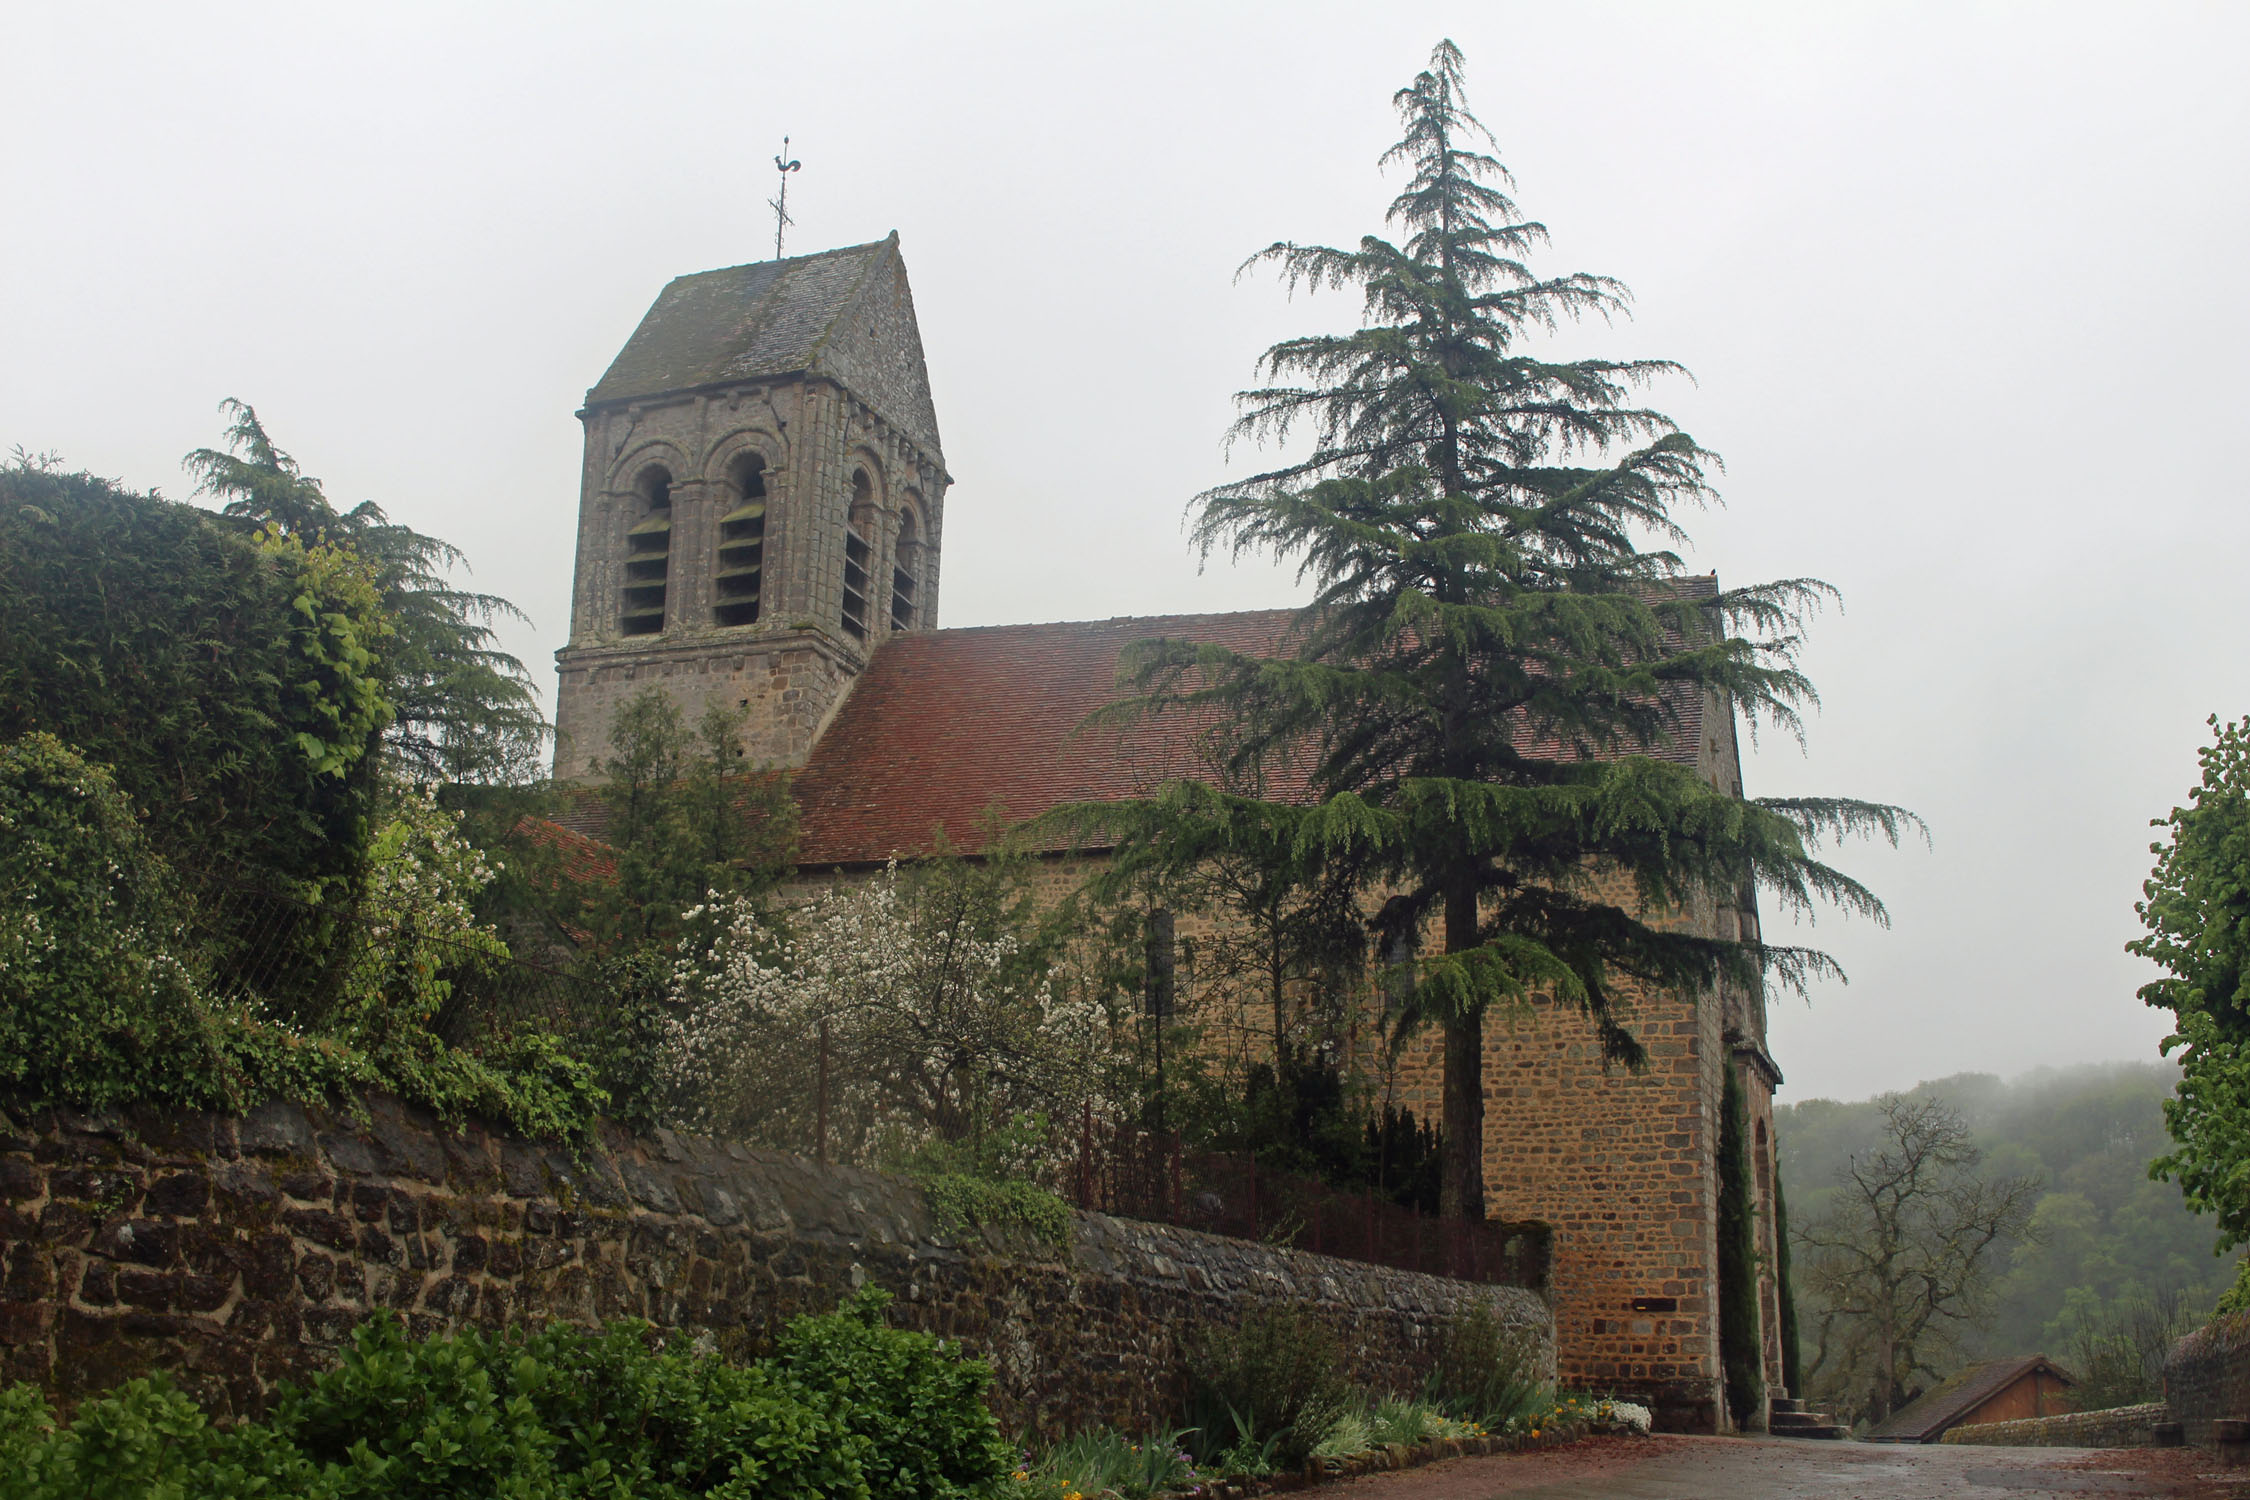 Saint-Céneri-le-Gérei